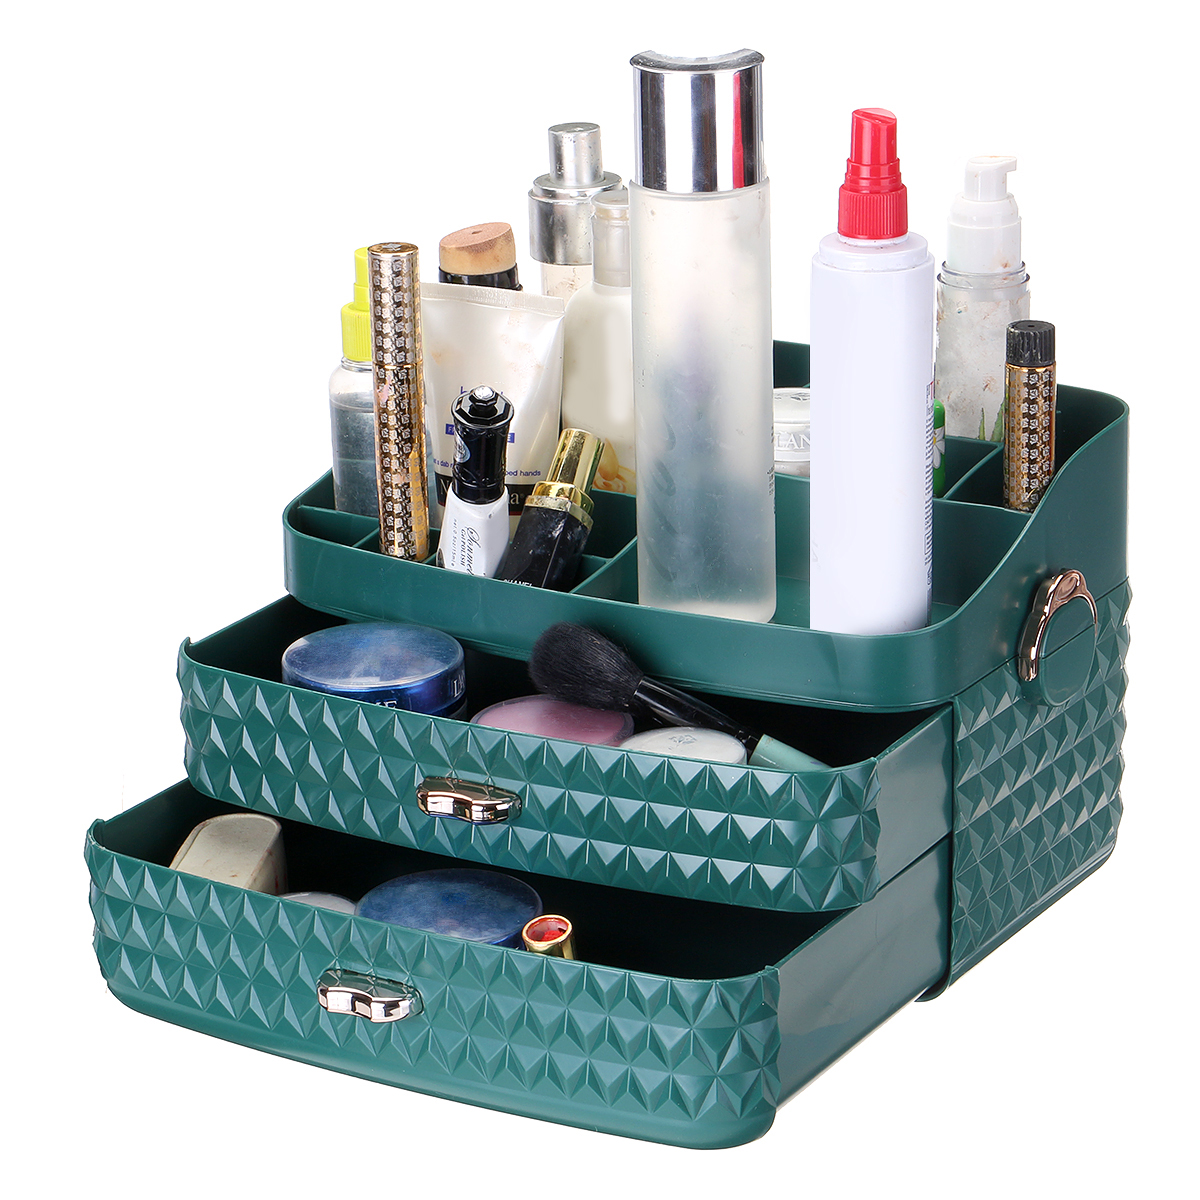 Dustproof-Cosmetic-Storage-Box-with-Drawer-Large-Capacity-Desktop-Furnishings-Organizer-Home-Desk-Su-1777438-21